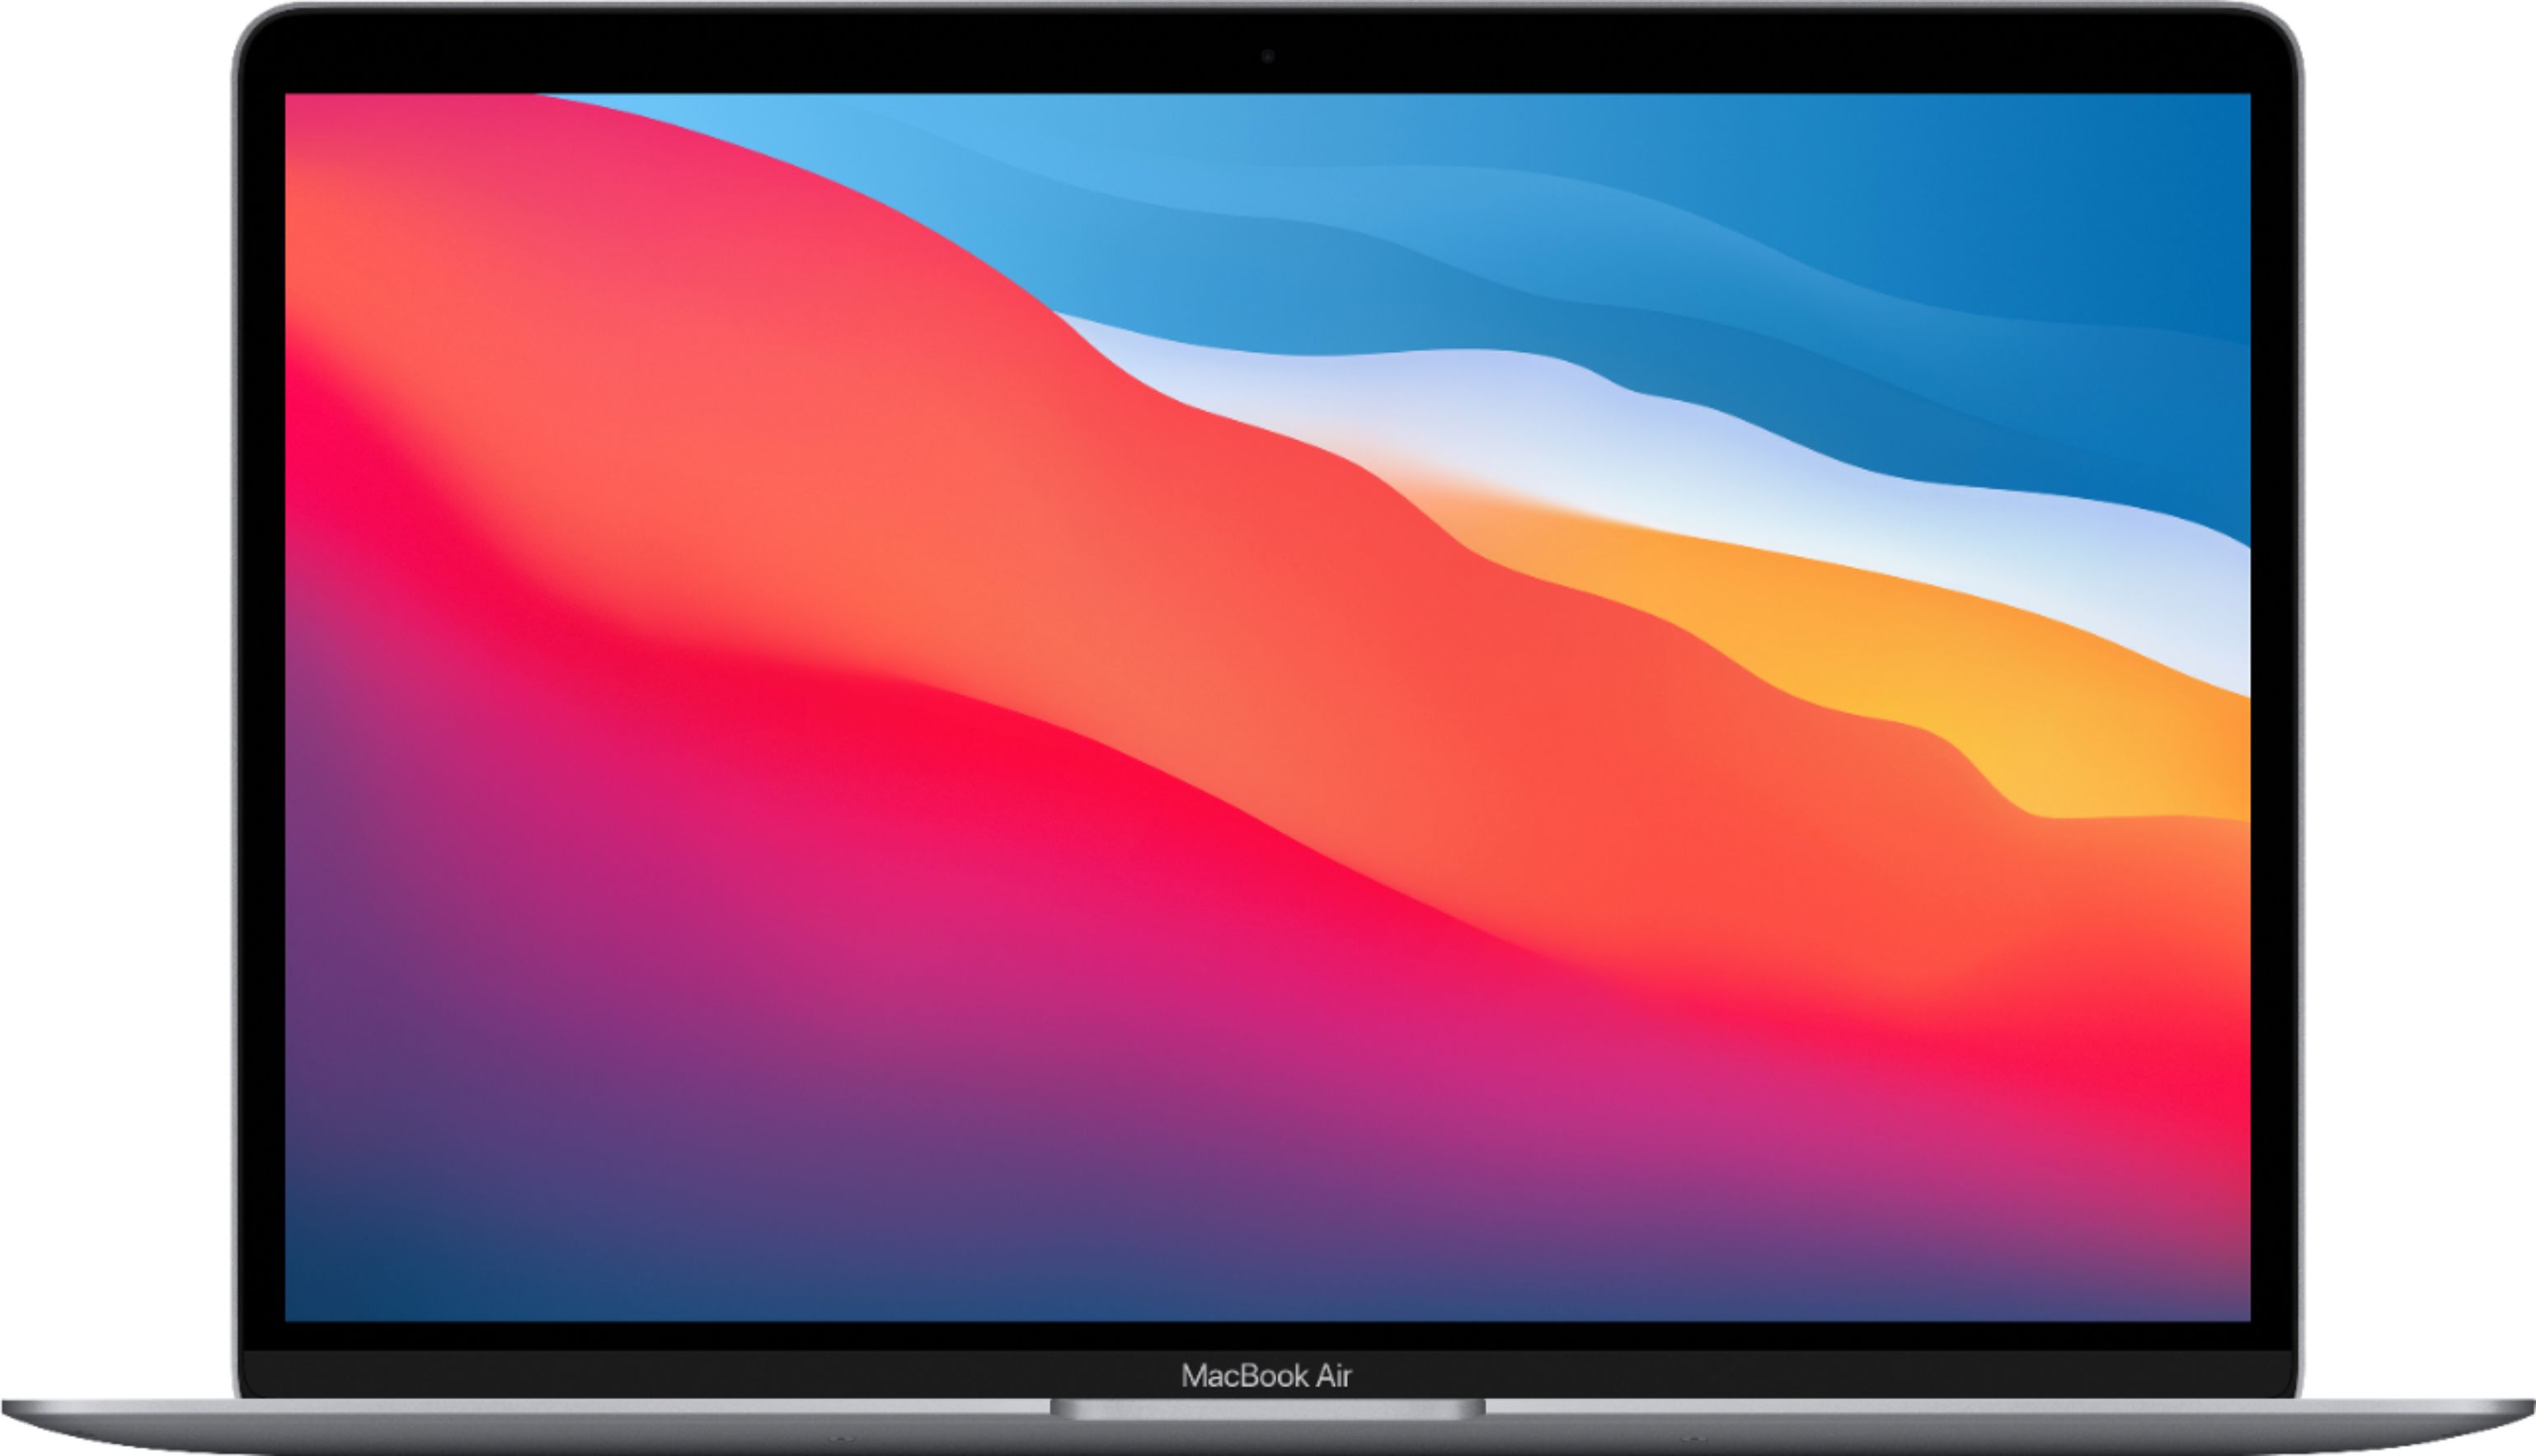 MacBook Air 13.3" Laptop - Apple M1 chip - 8GB Memory - 512GB SSD $1099.99